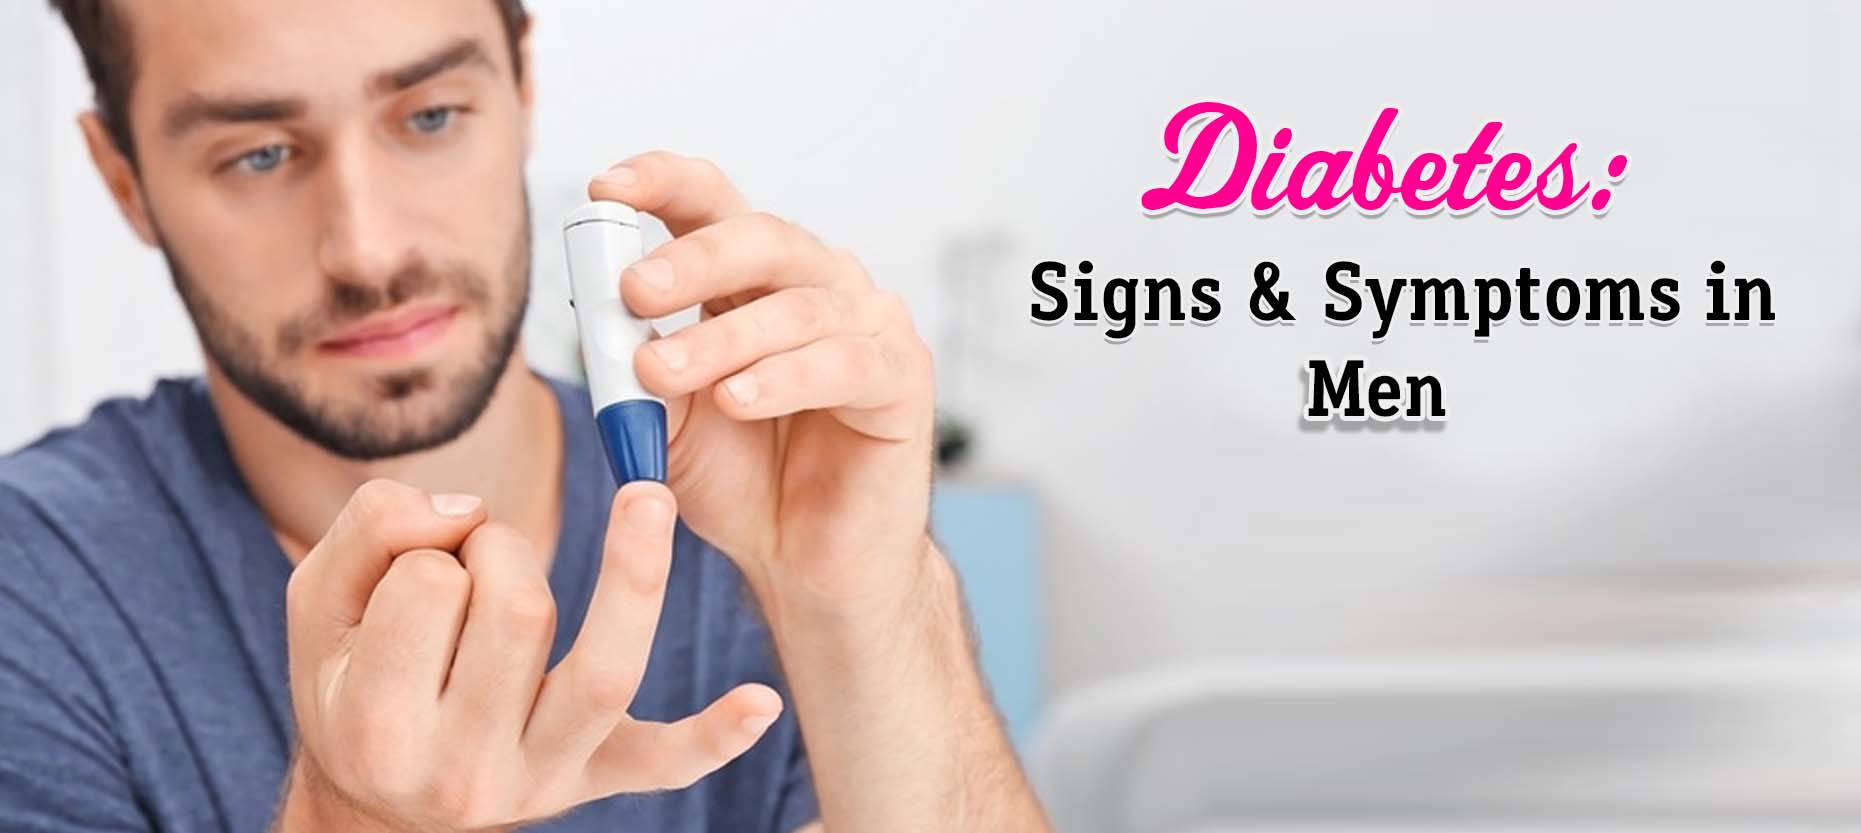 Diabetes Signs & Symptoms in Men